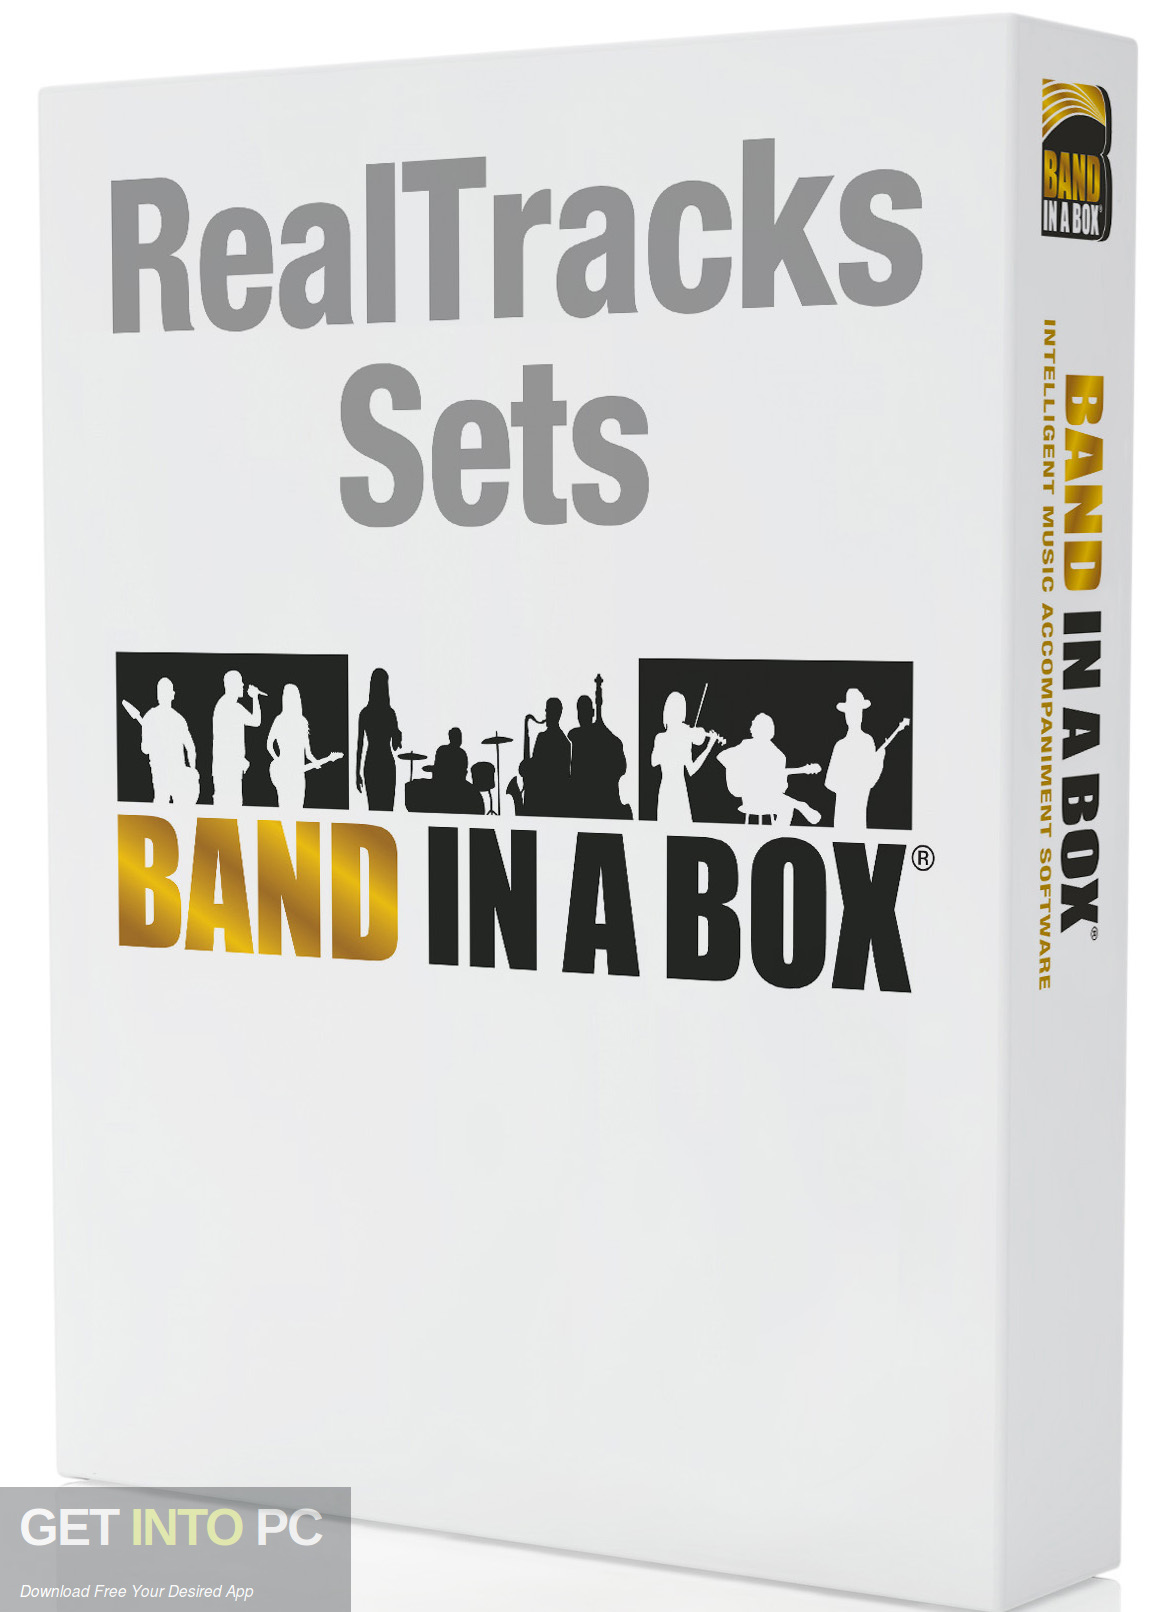 Band in a Box 2016 Full Crack